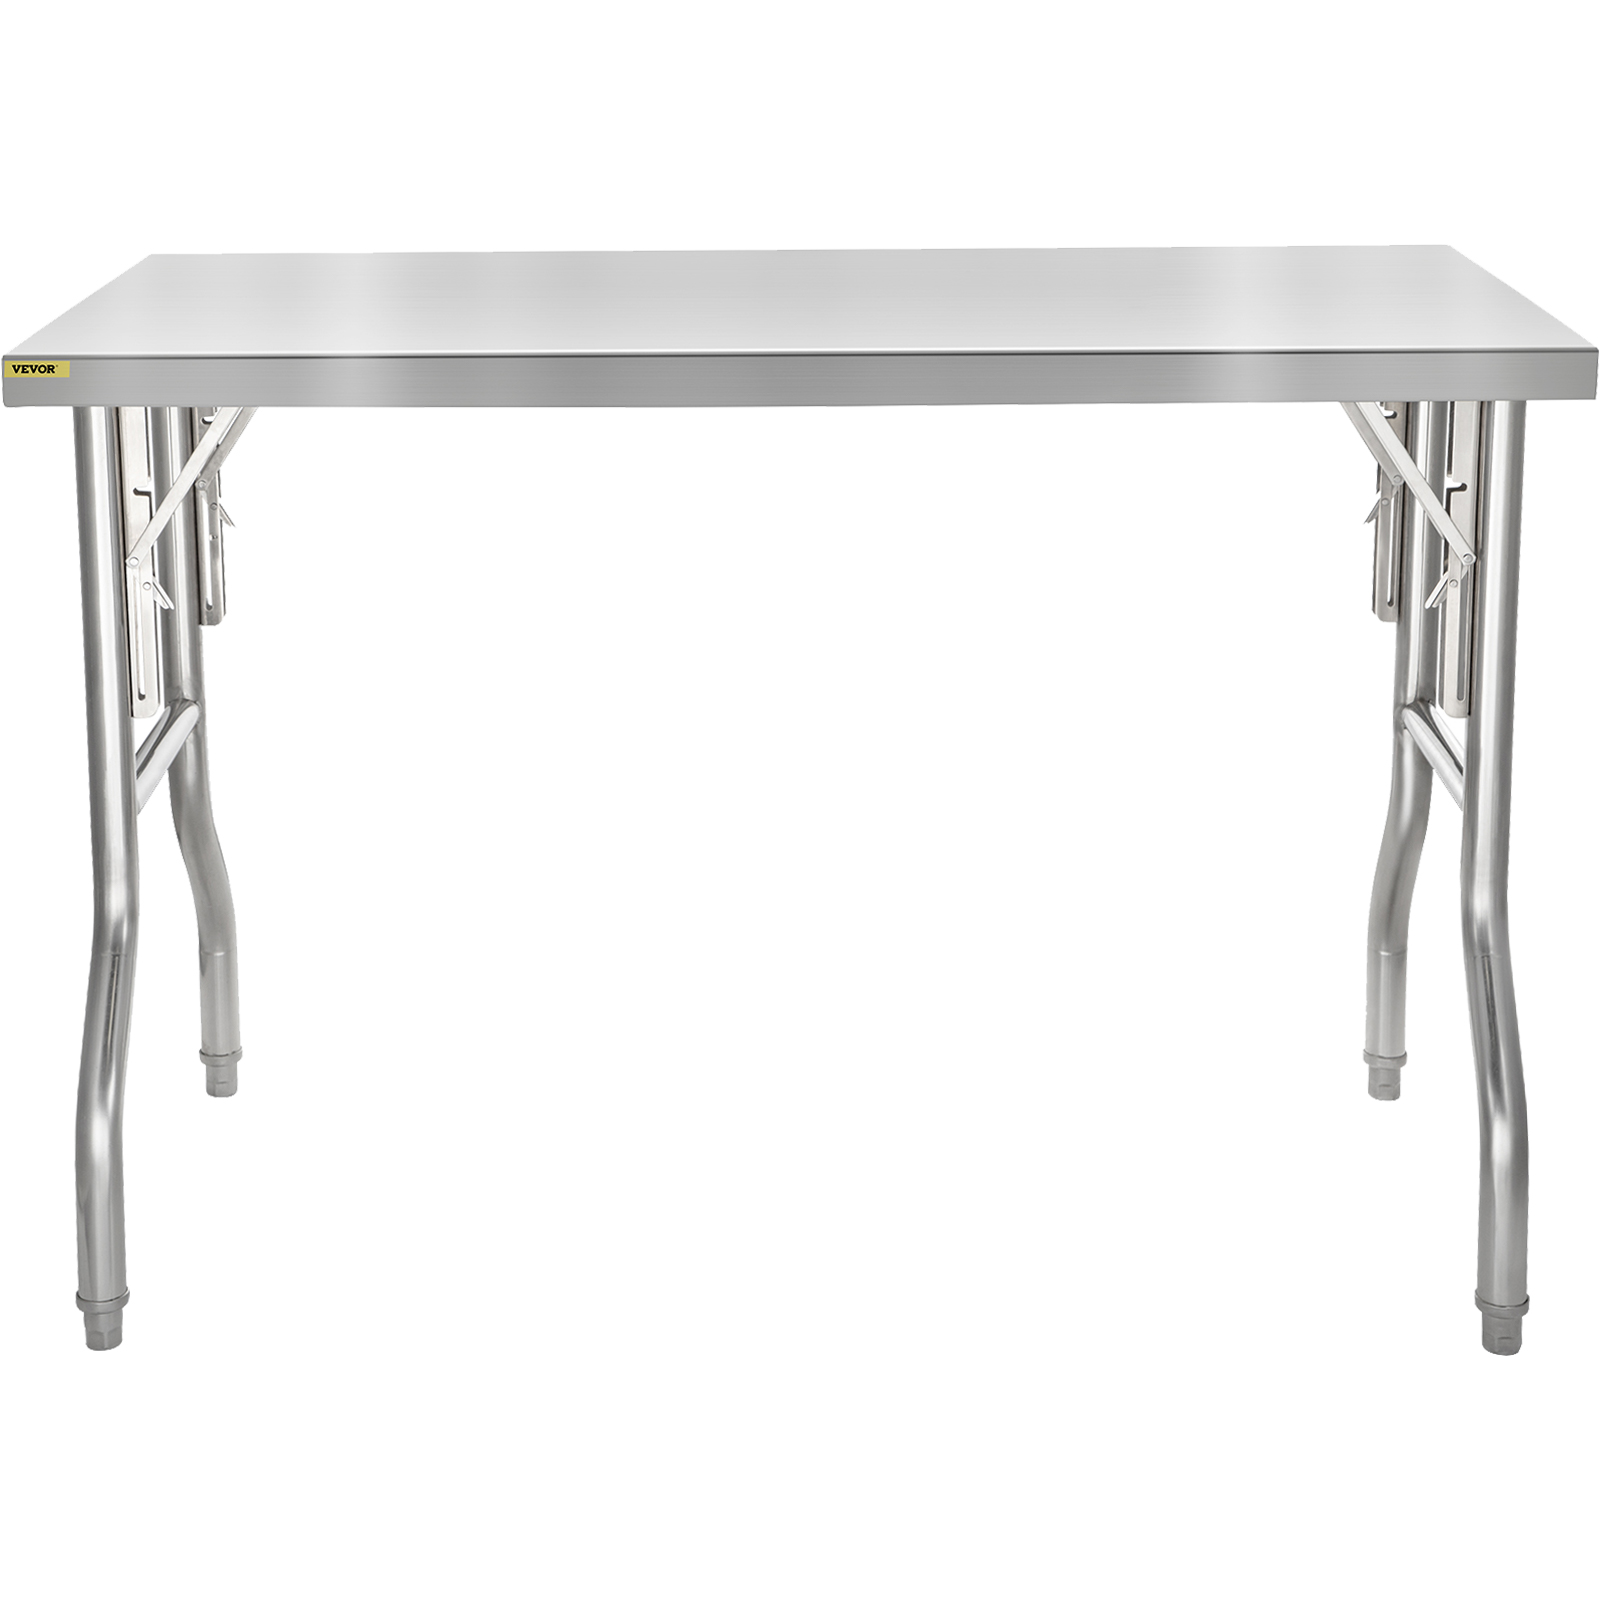 VEVOR Commercial Worktable Workstation Folding Commercial Prep Table 48 x 30 In от Vevor Many GEOs